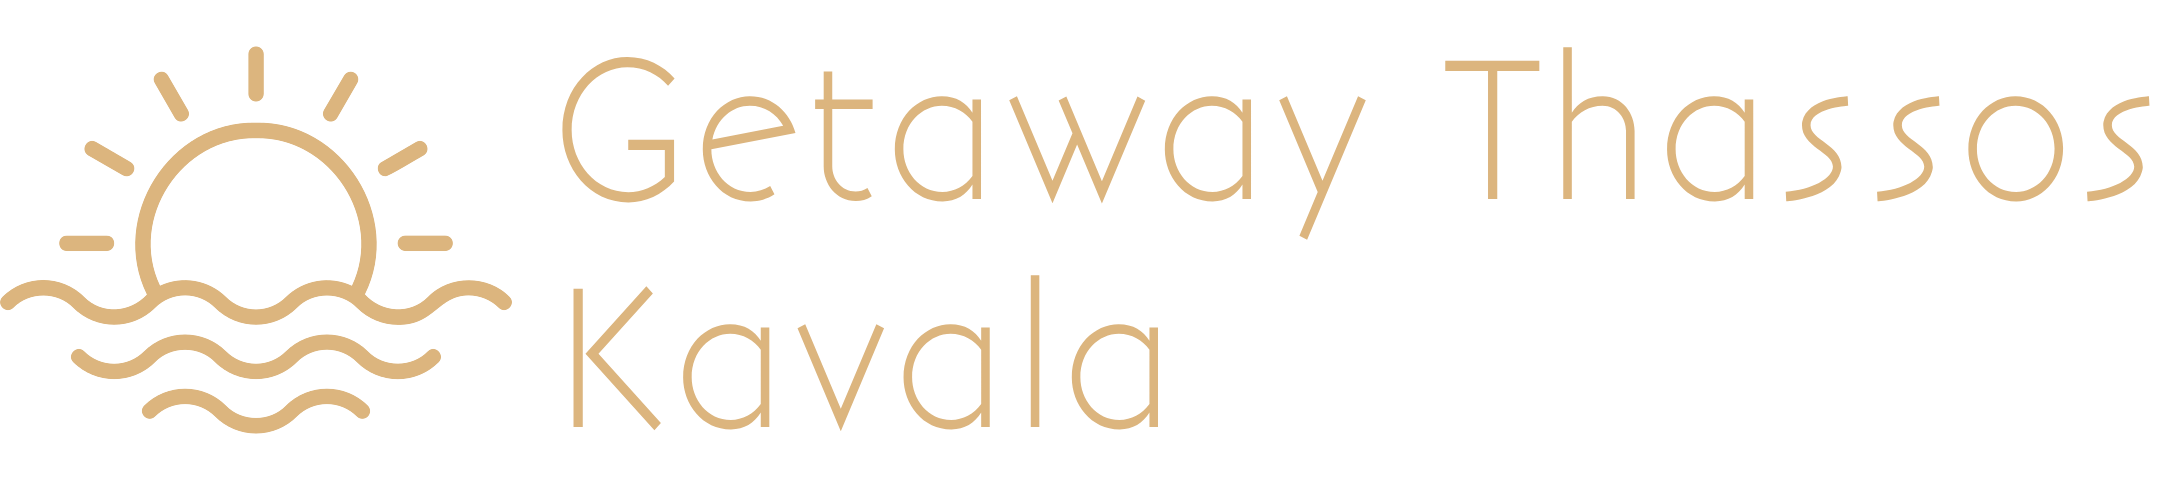 Getaway Thassos Kavala | gelef1995, Author at Getaway Thassos Kavala